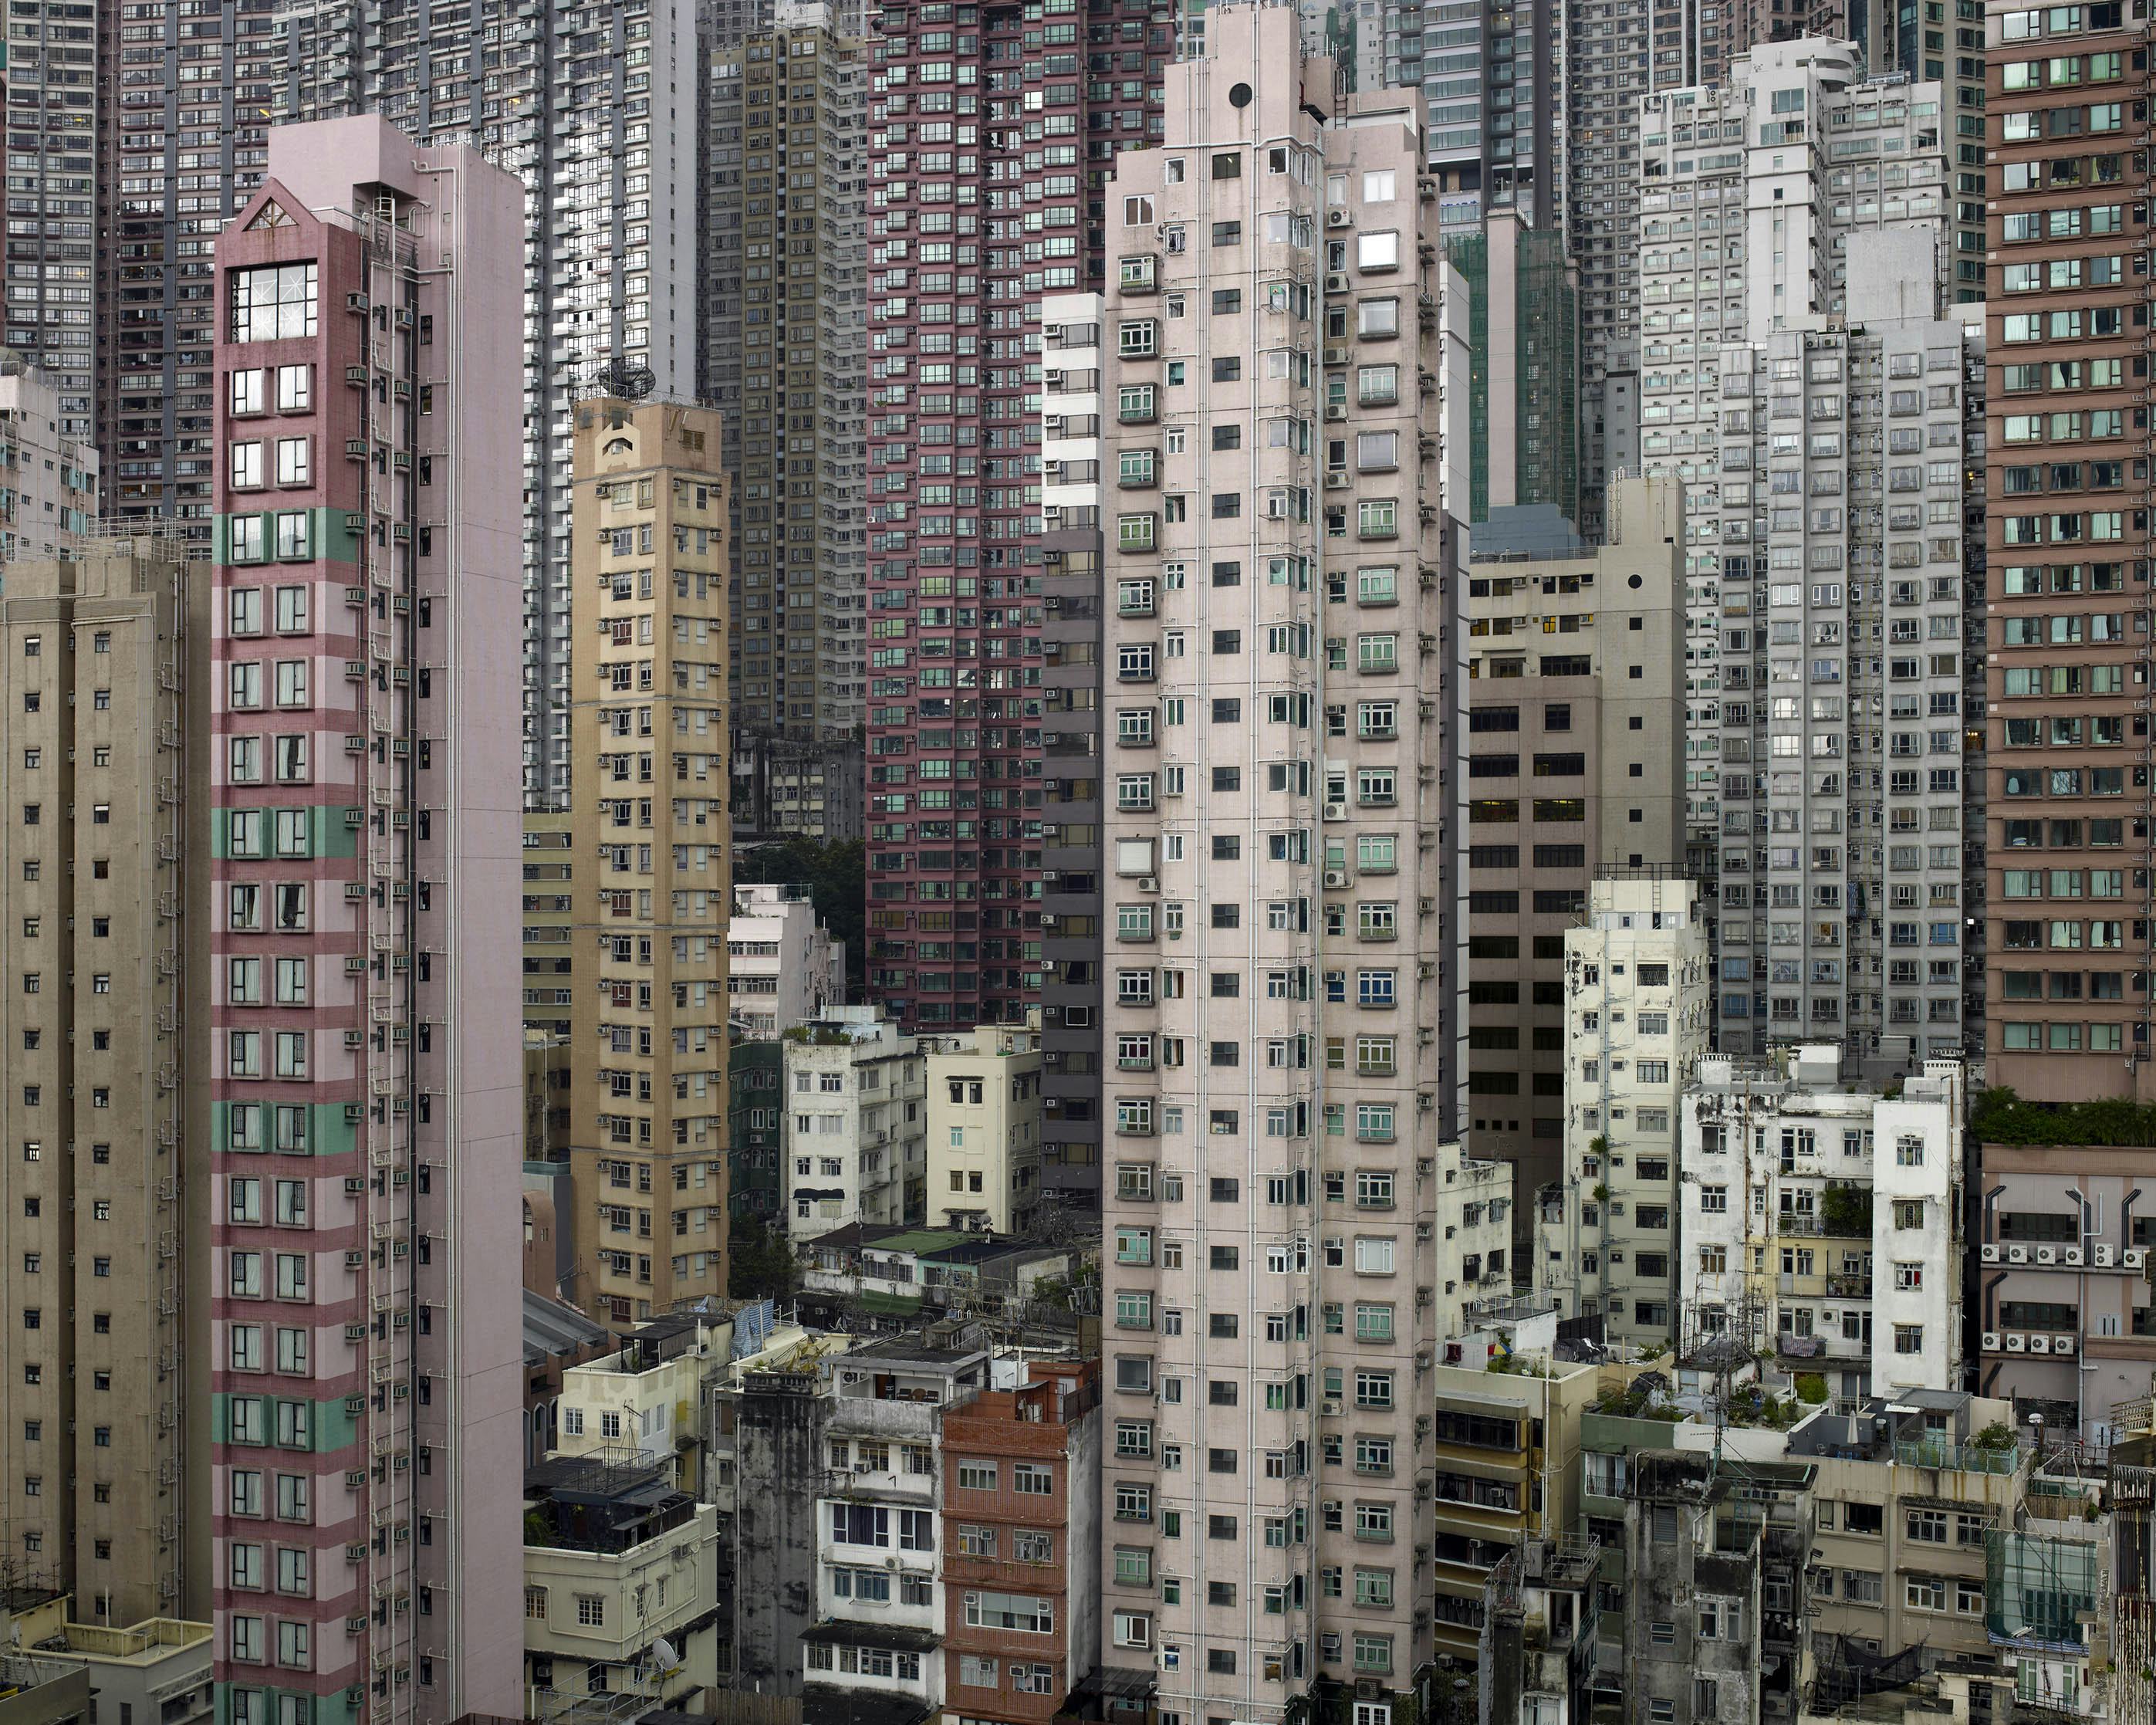 Michael Wolf, Architecture of Density, Hong Kong 2003-2014. © Michael Wolf 2018, courtesy Galerie Wouter van Leeuwen